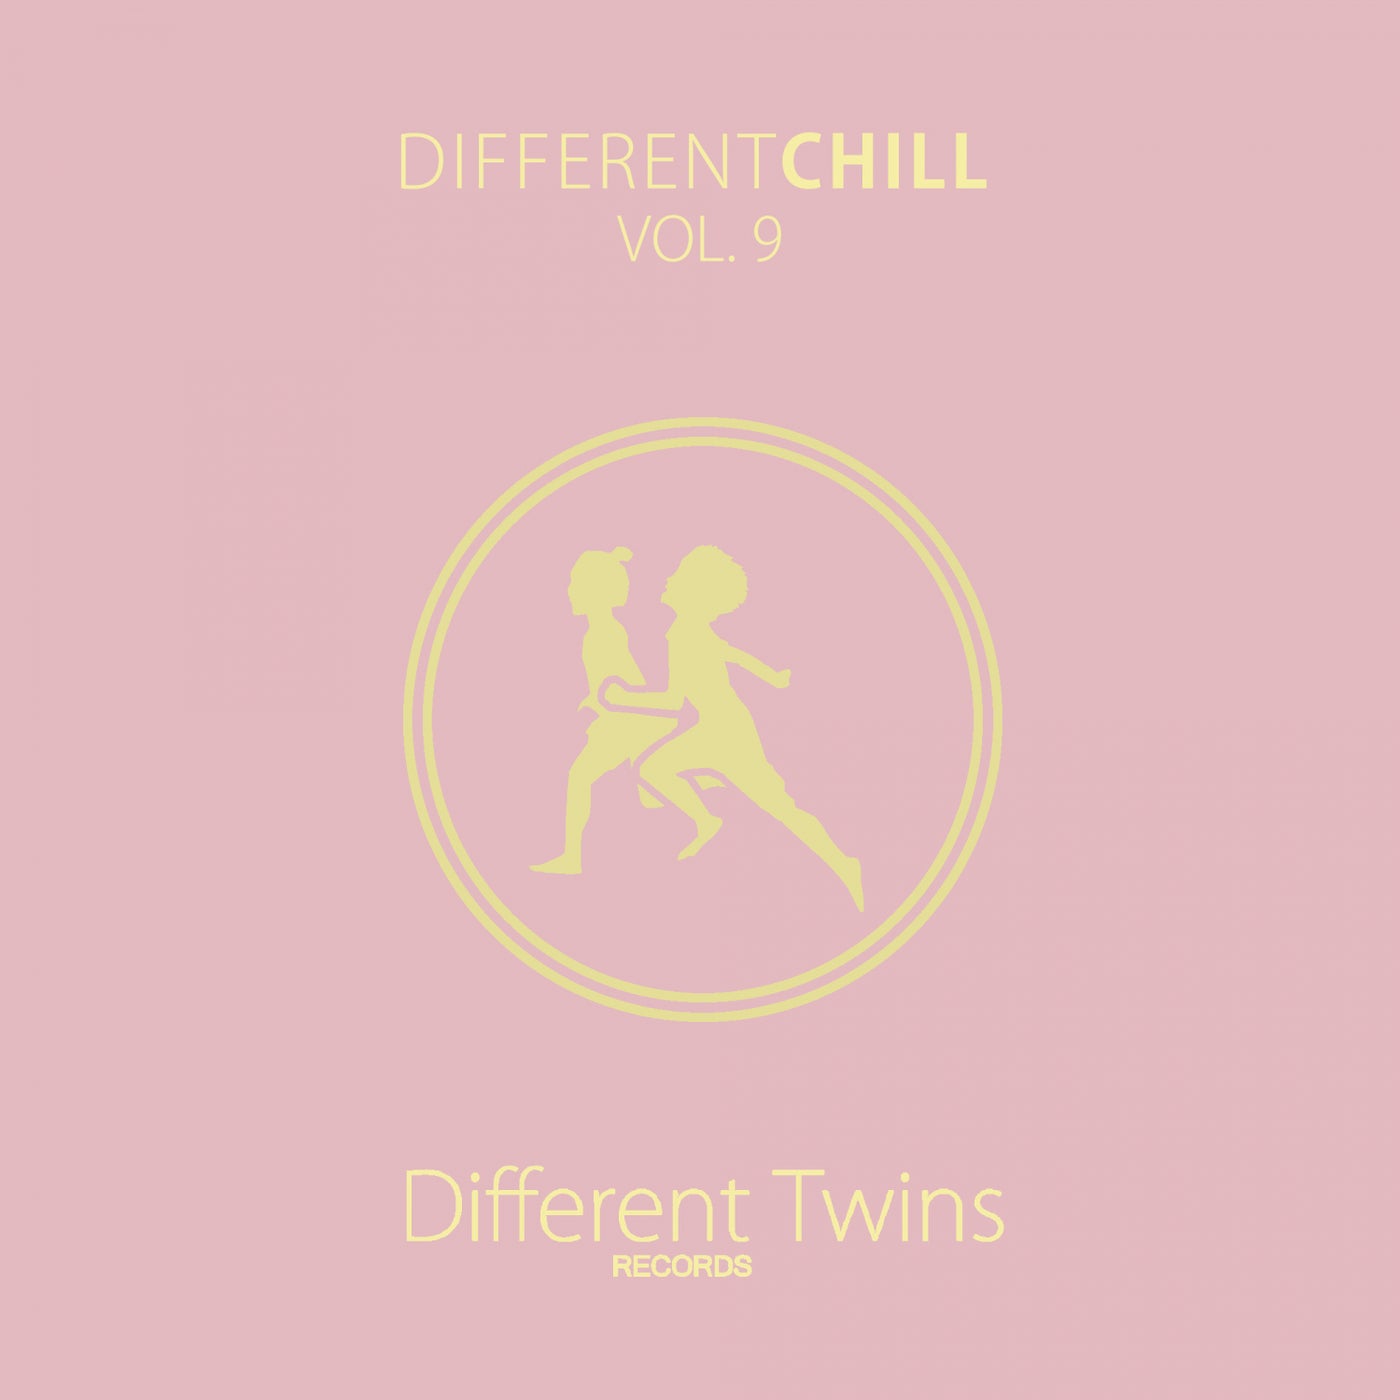 Different Chill, Vol 9